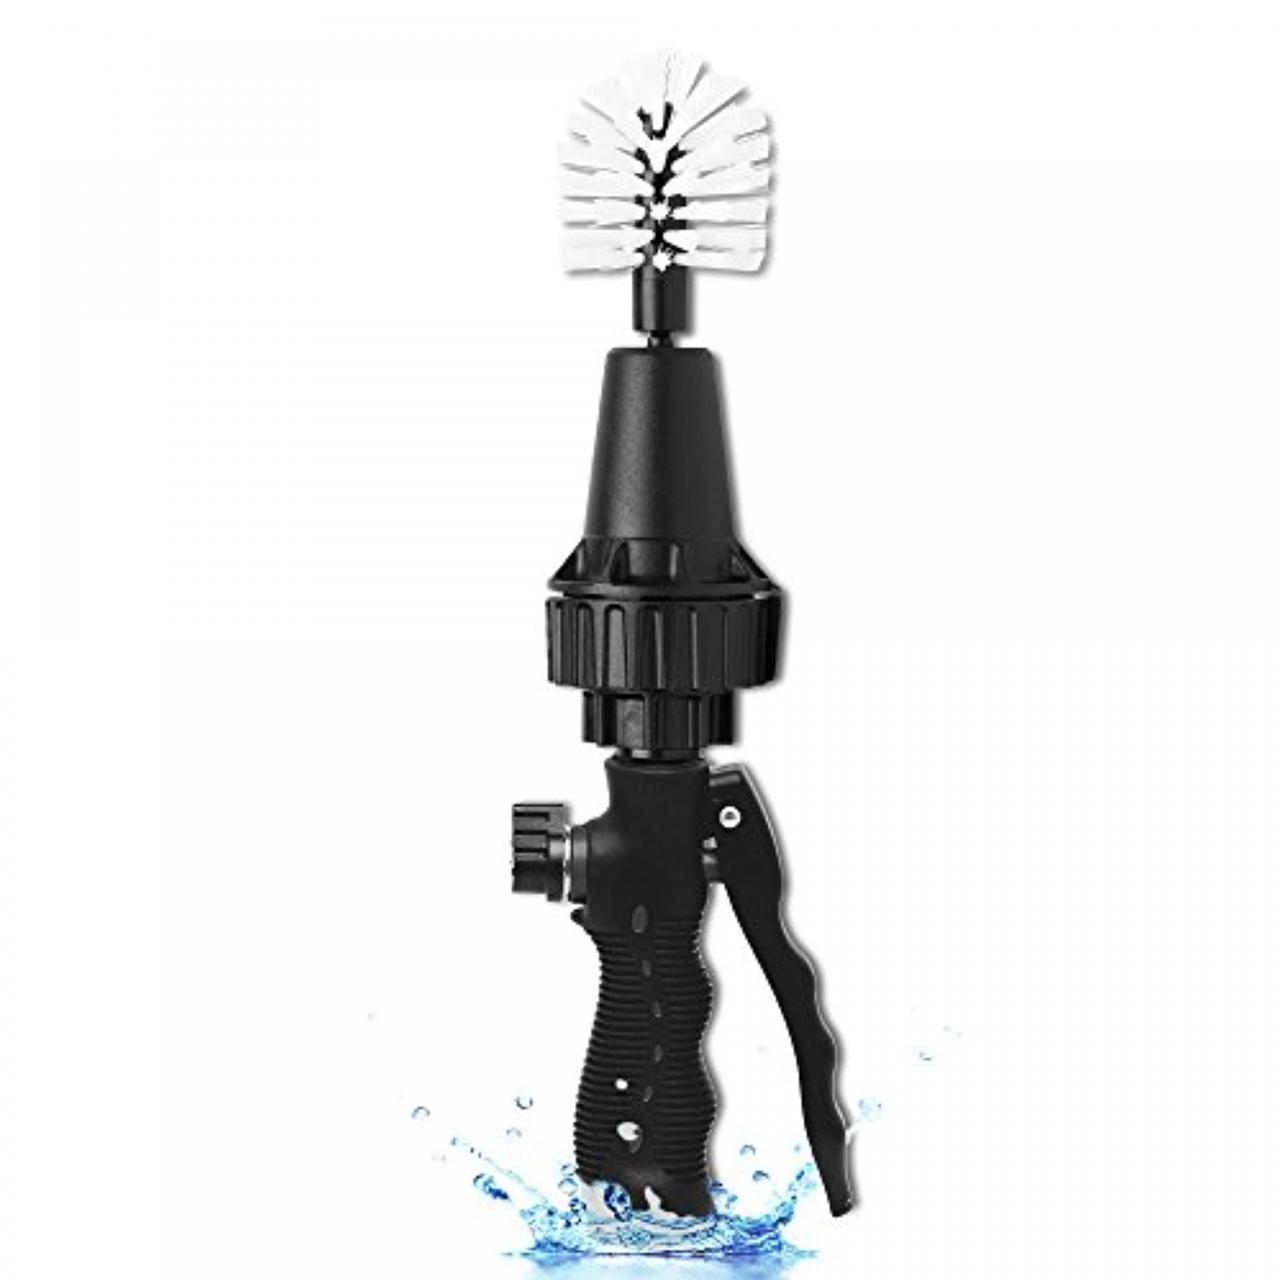 Snapklik.com: Brush Hero Pro- Wheel Brush With Metal Flow Control Trigger,  Premium Water-Powered Turbine For Rims, Engines, Bikes, Equipment,  Furniture And More